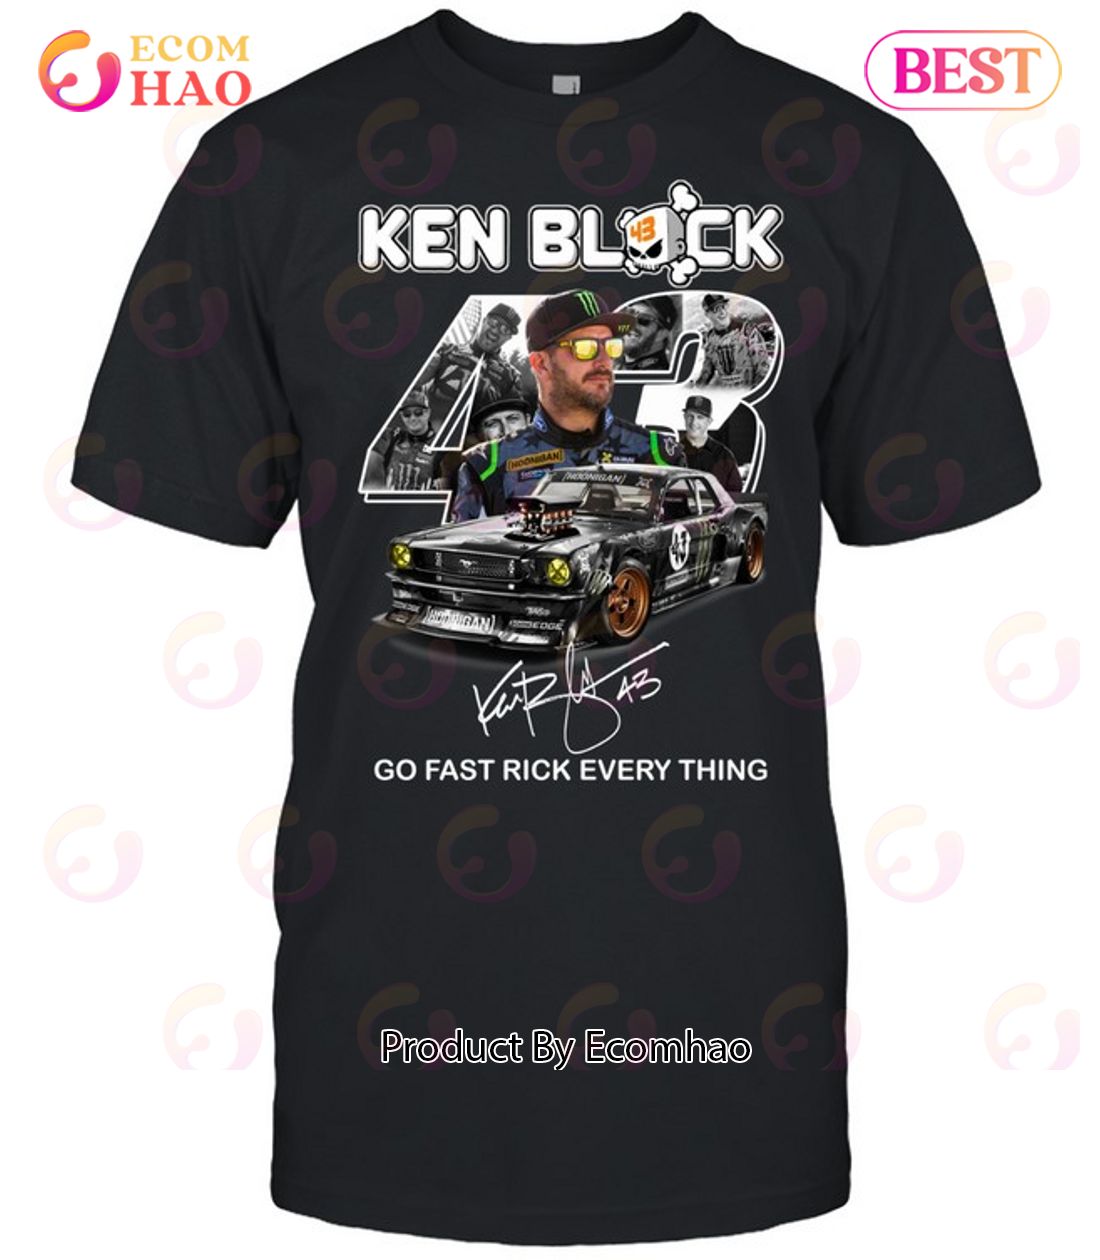 Ken Block 43 Go Fast Rick Every Thing T-Shirt